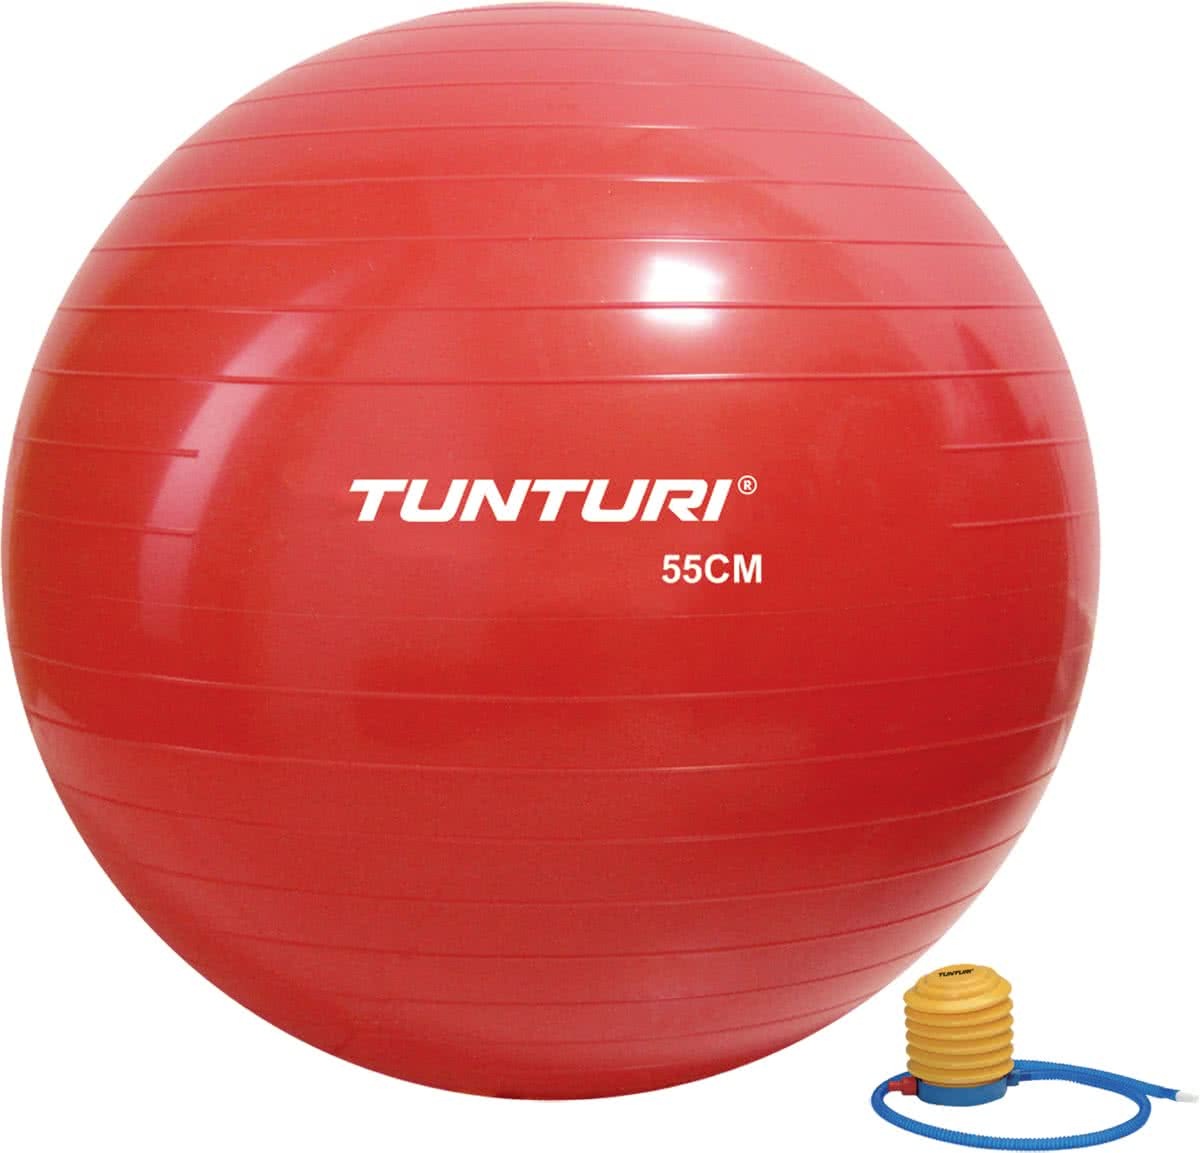 Tunturi Gymball 55cm - Rood